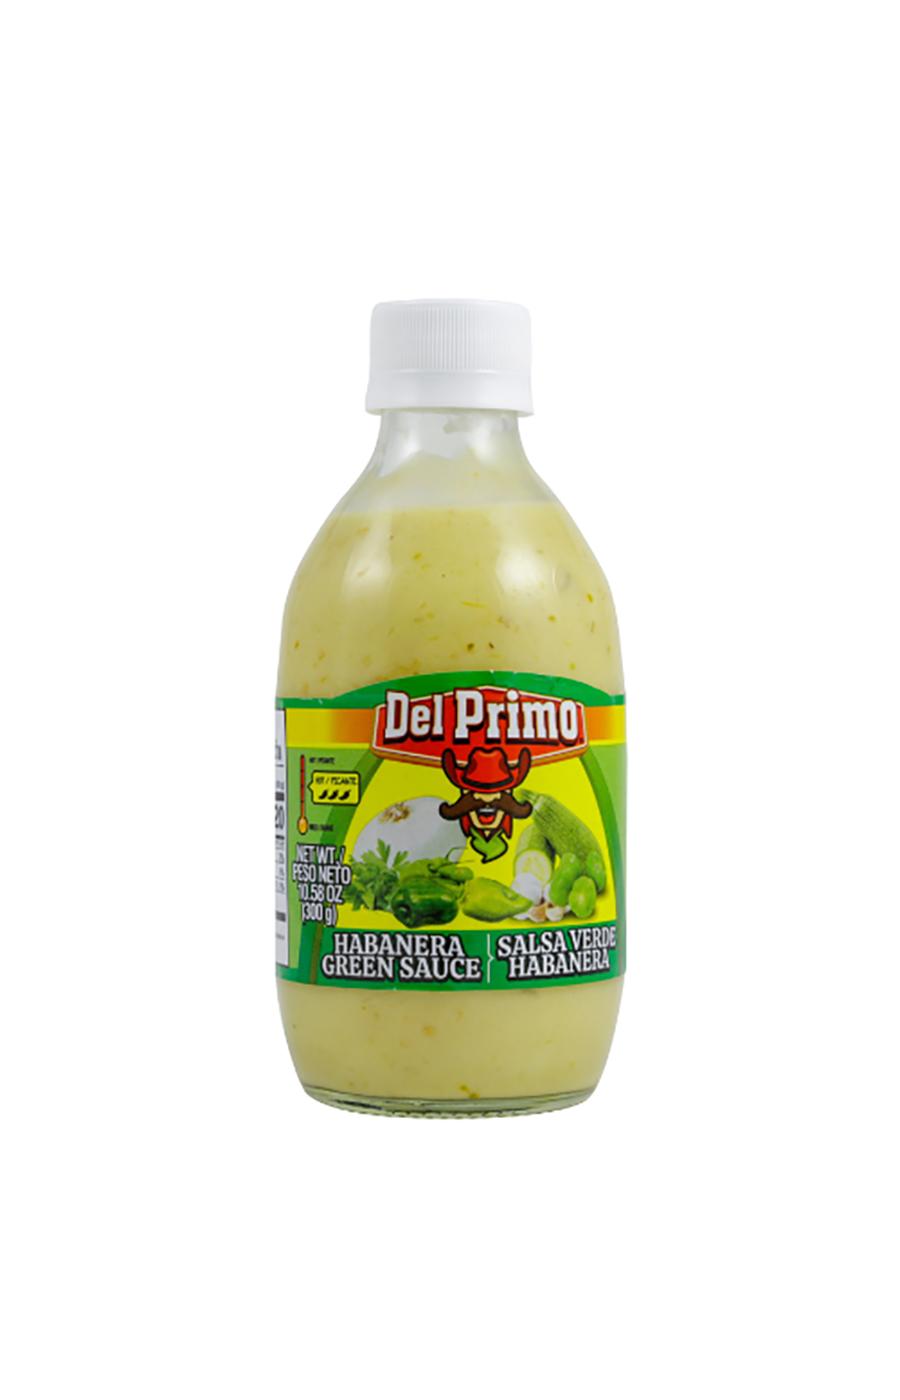 Del Primo Salsa Habanera Verde Green Sauce; image 1 of 3